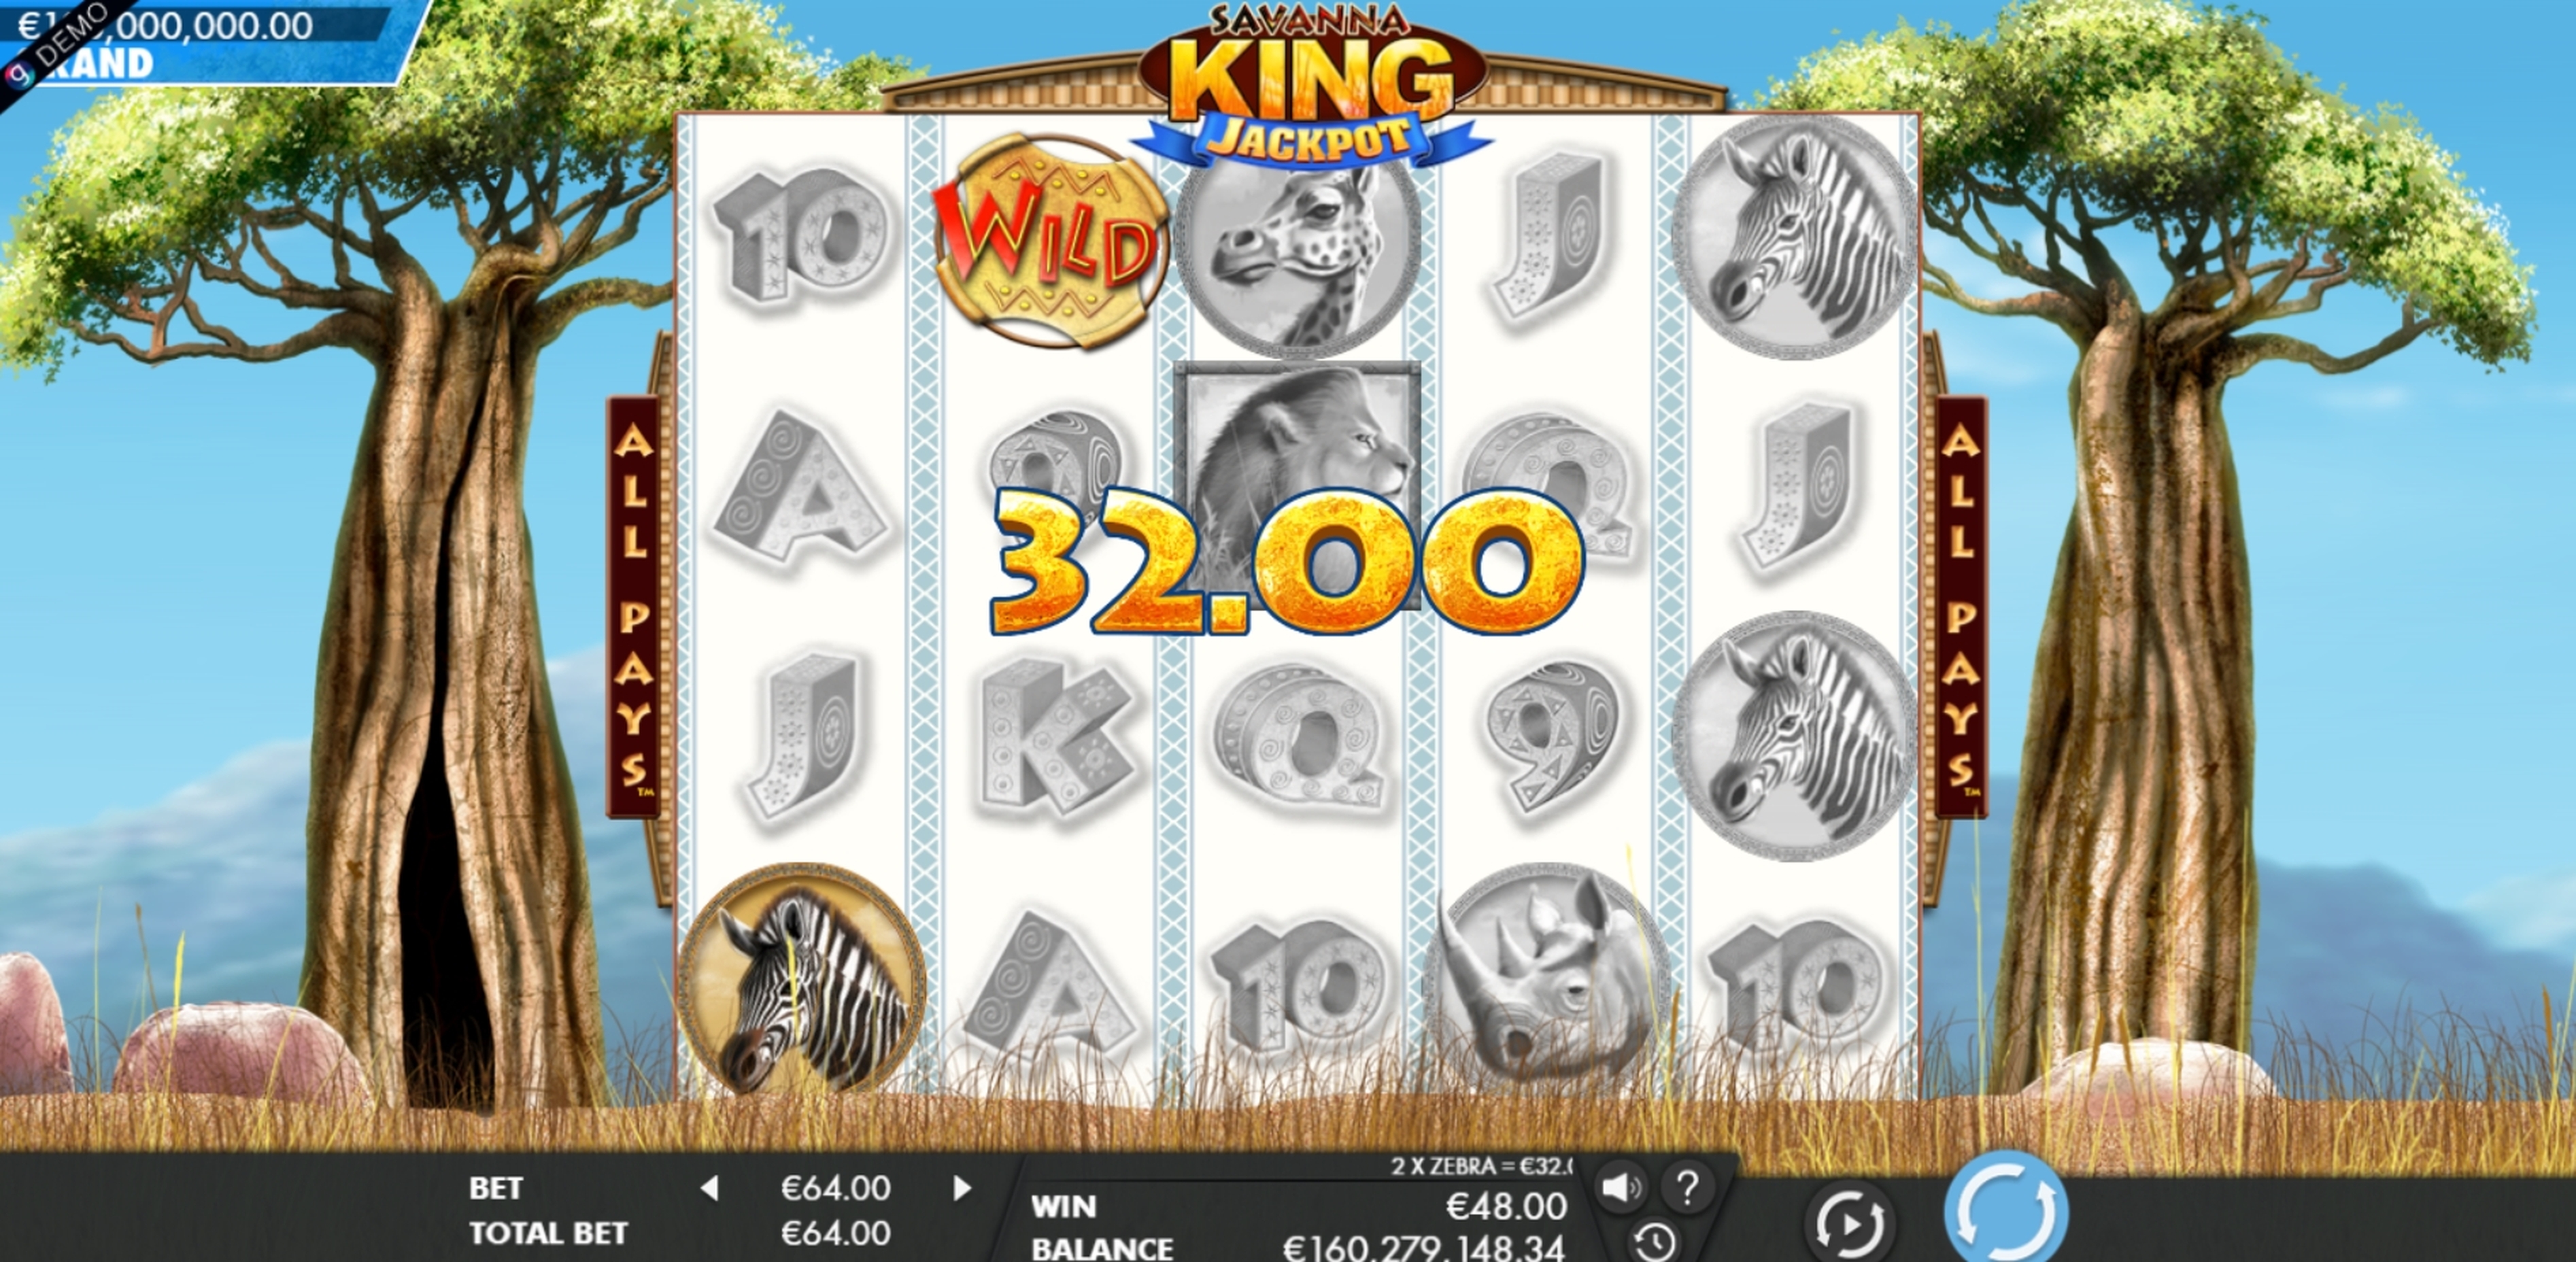 Win Money in Savanna King - Jackpot Free Slot Game by Genesis Gaming